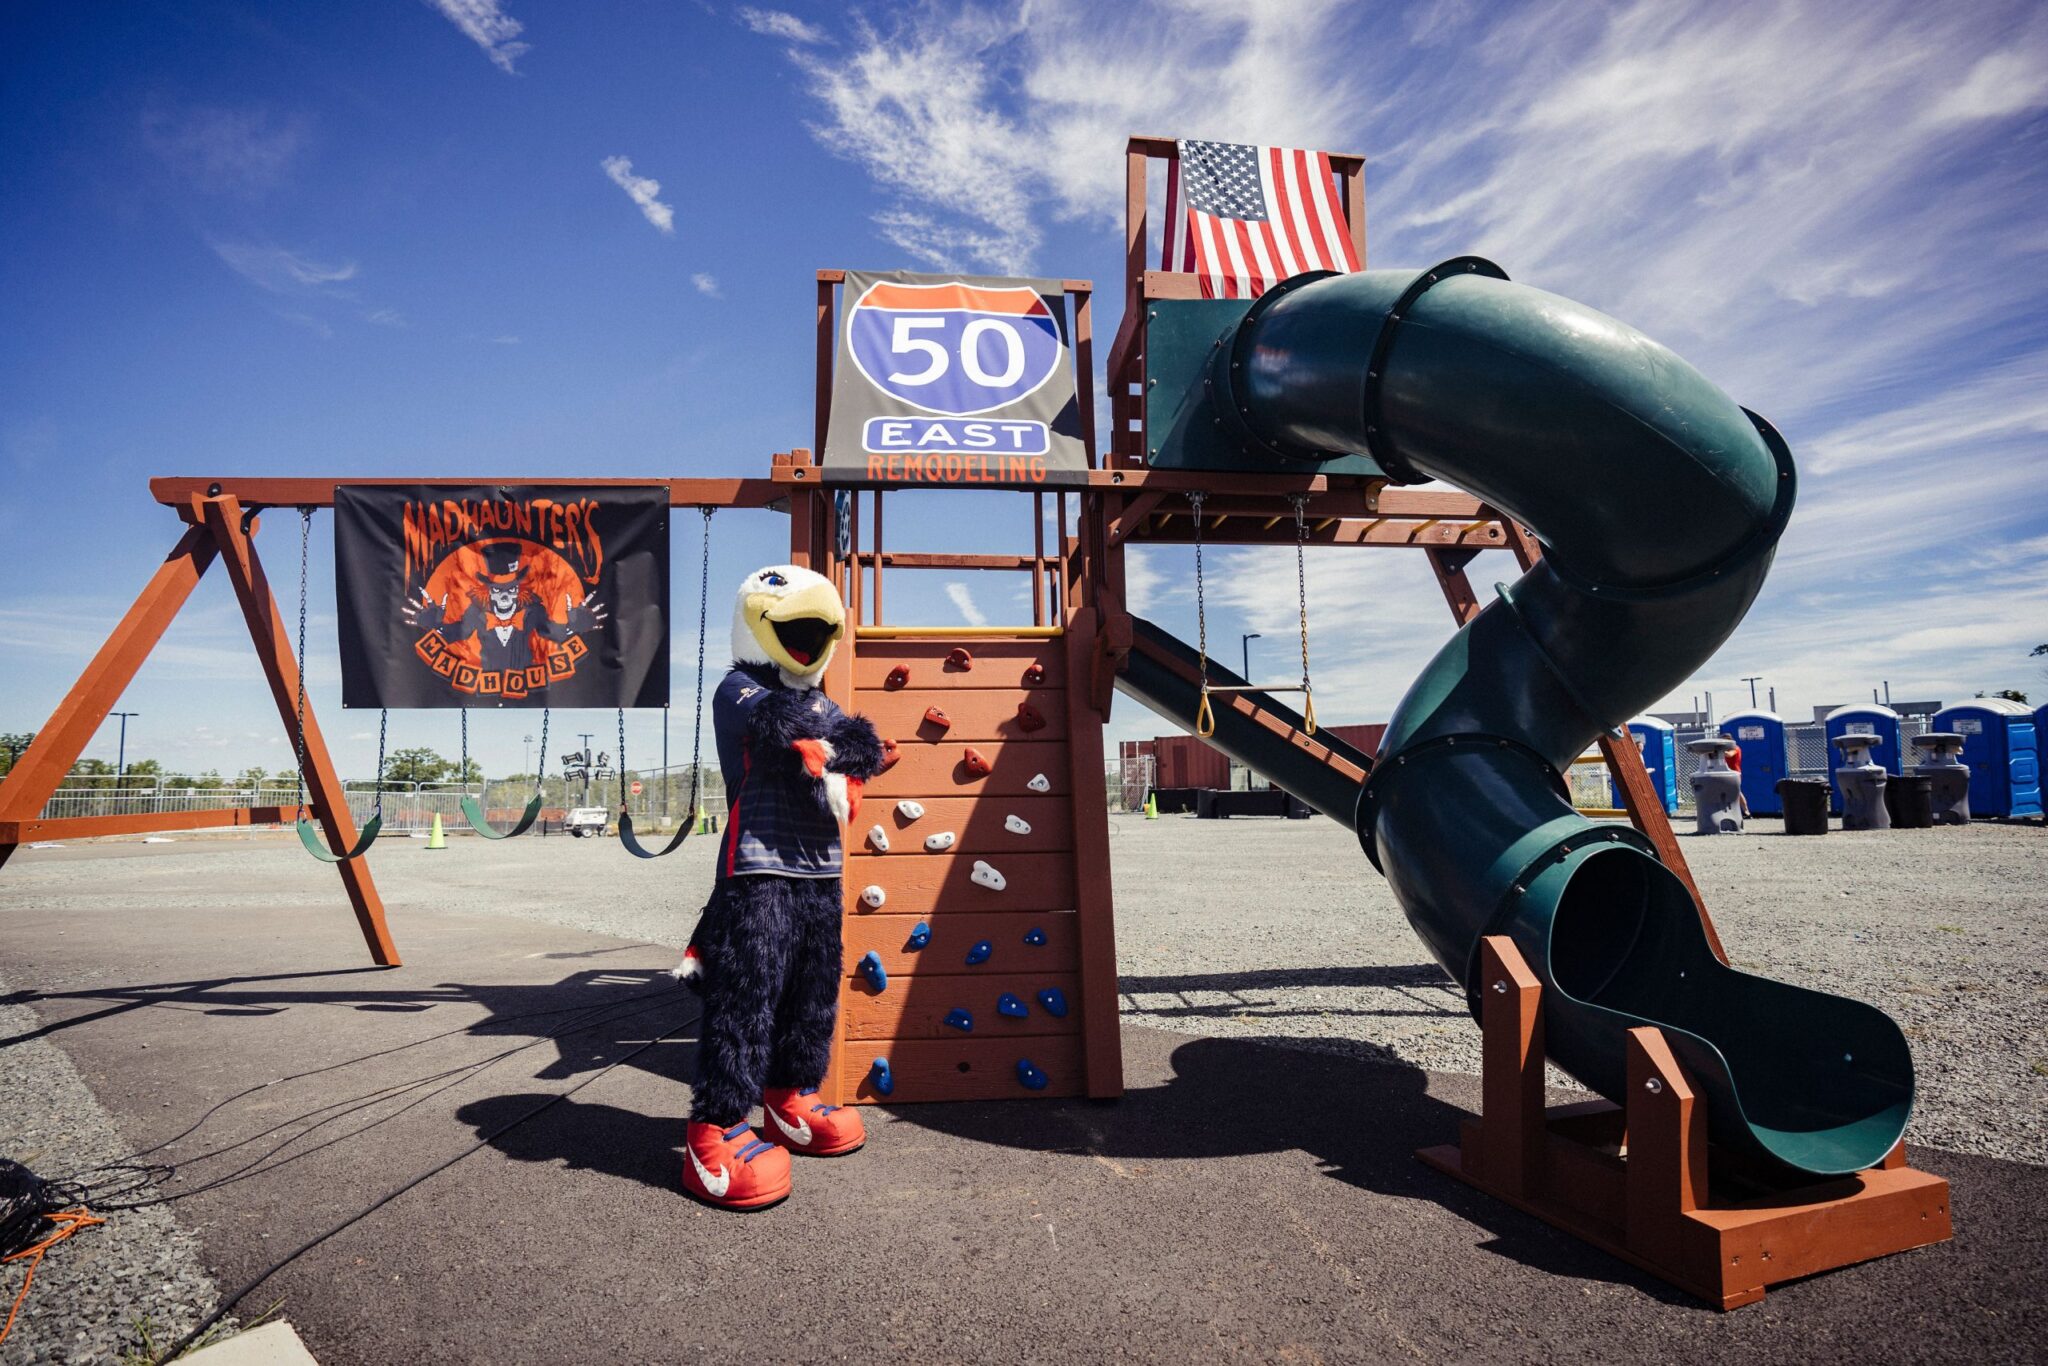 Washington Spirit, 50 East Remodeling, Madhaunter’s Madhouse donate Playground to Mobile Hope Loudoun Featured Image